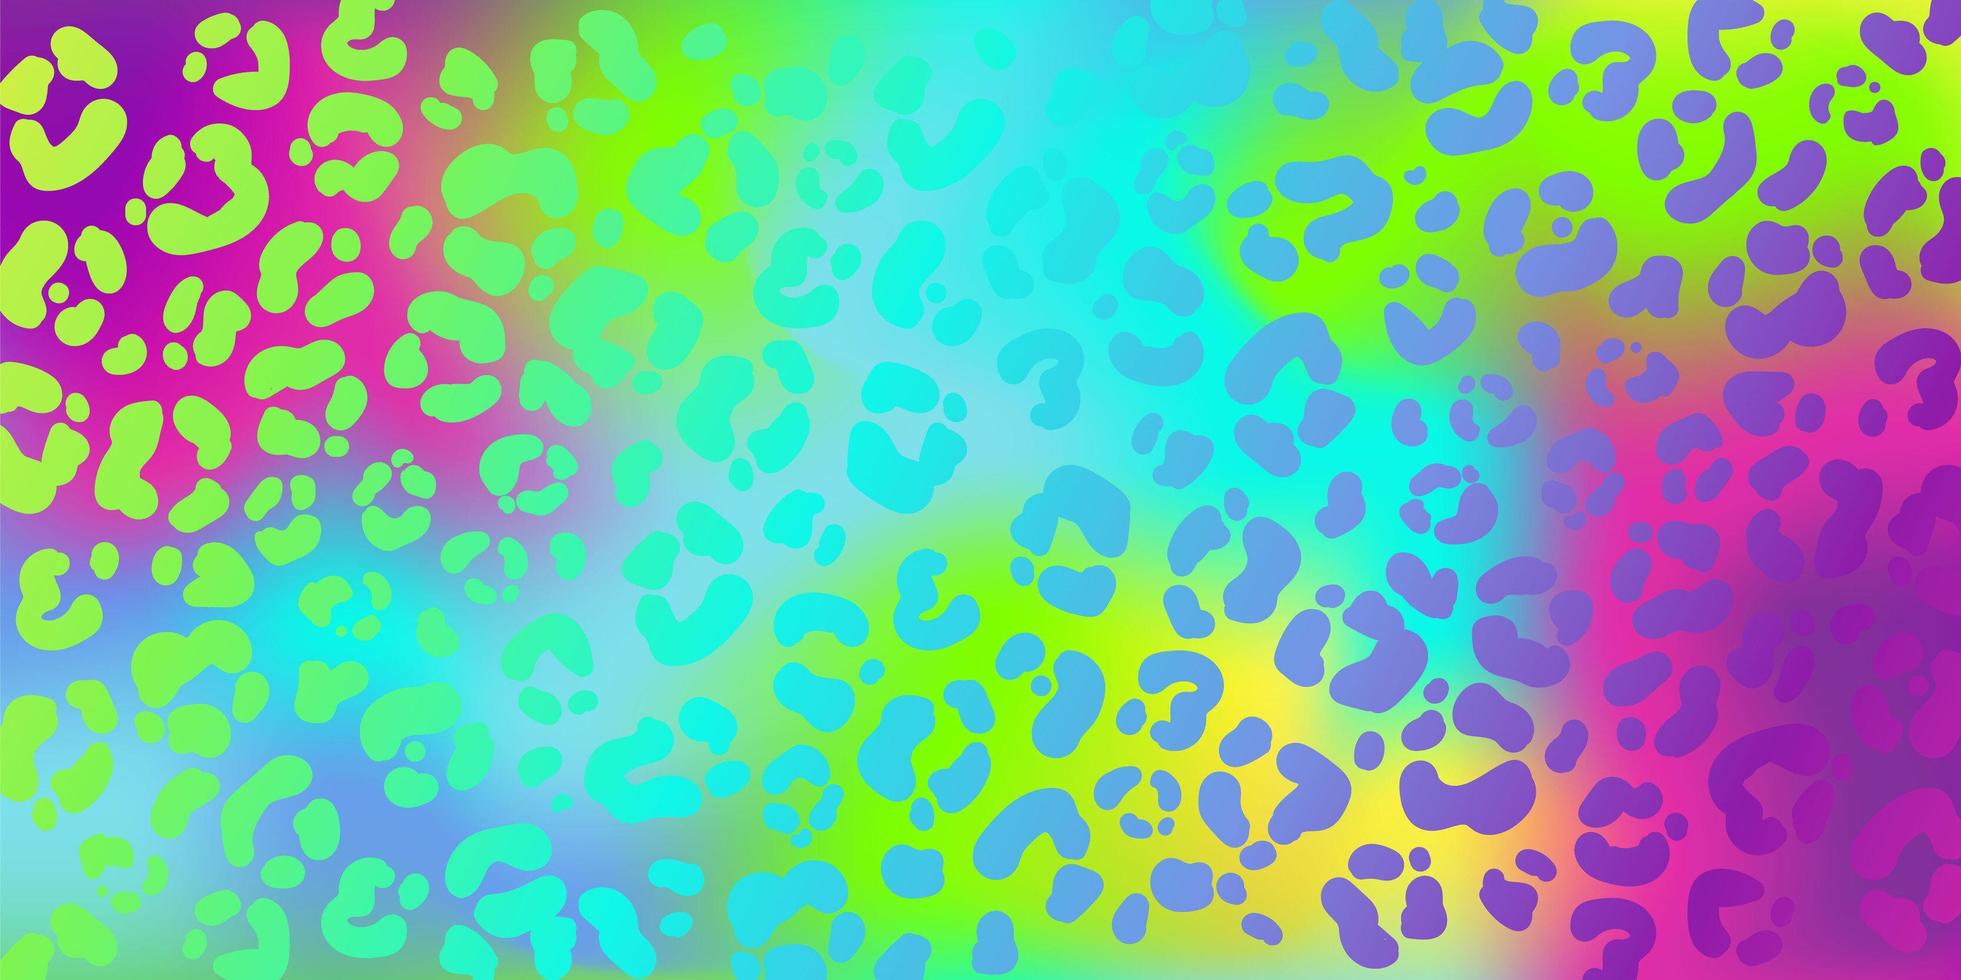 patrón de leopardo de neón. Fondo manchado de colores del arco iris. vector  animal print. fondo de pantalla 4708350 Vector en Vecteezy